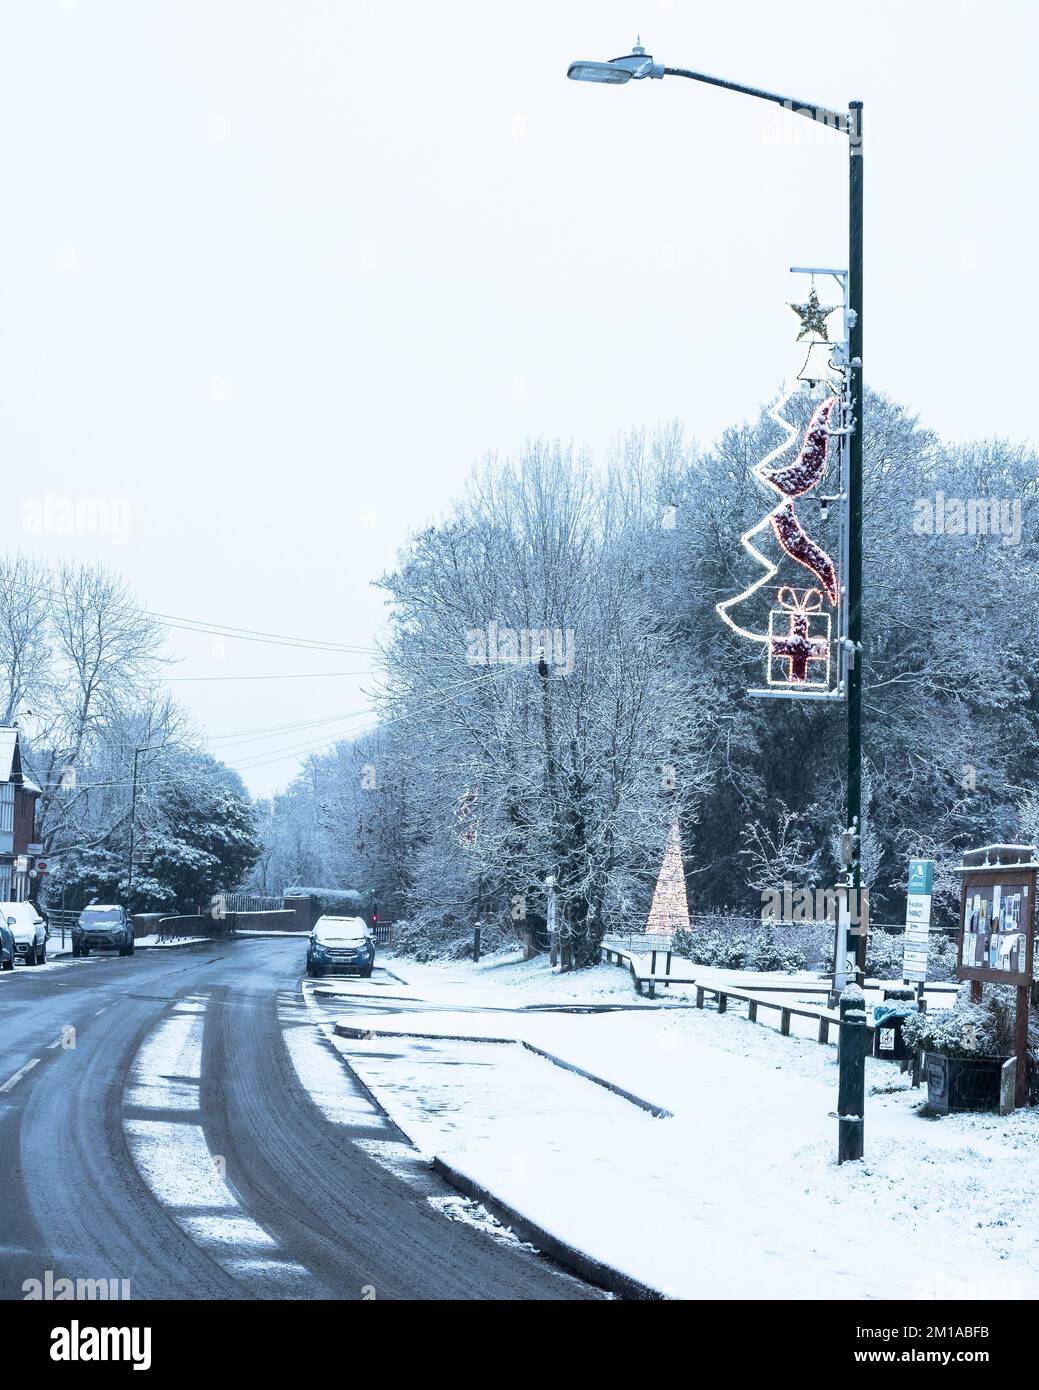 Village snowy winter scene with Christmas decorations. Wellesbourne, England UK. Stock Photo